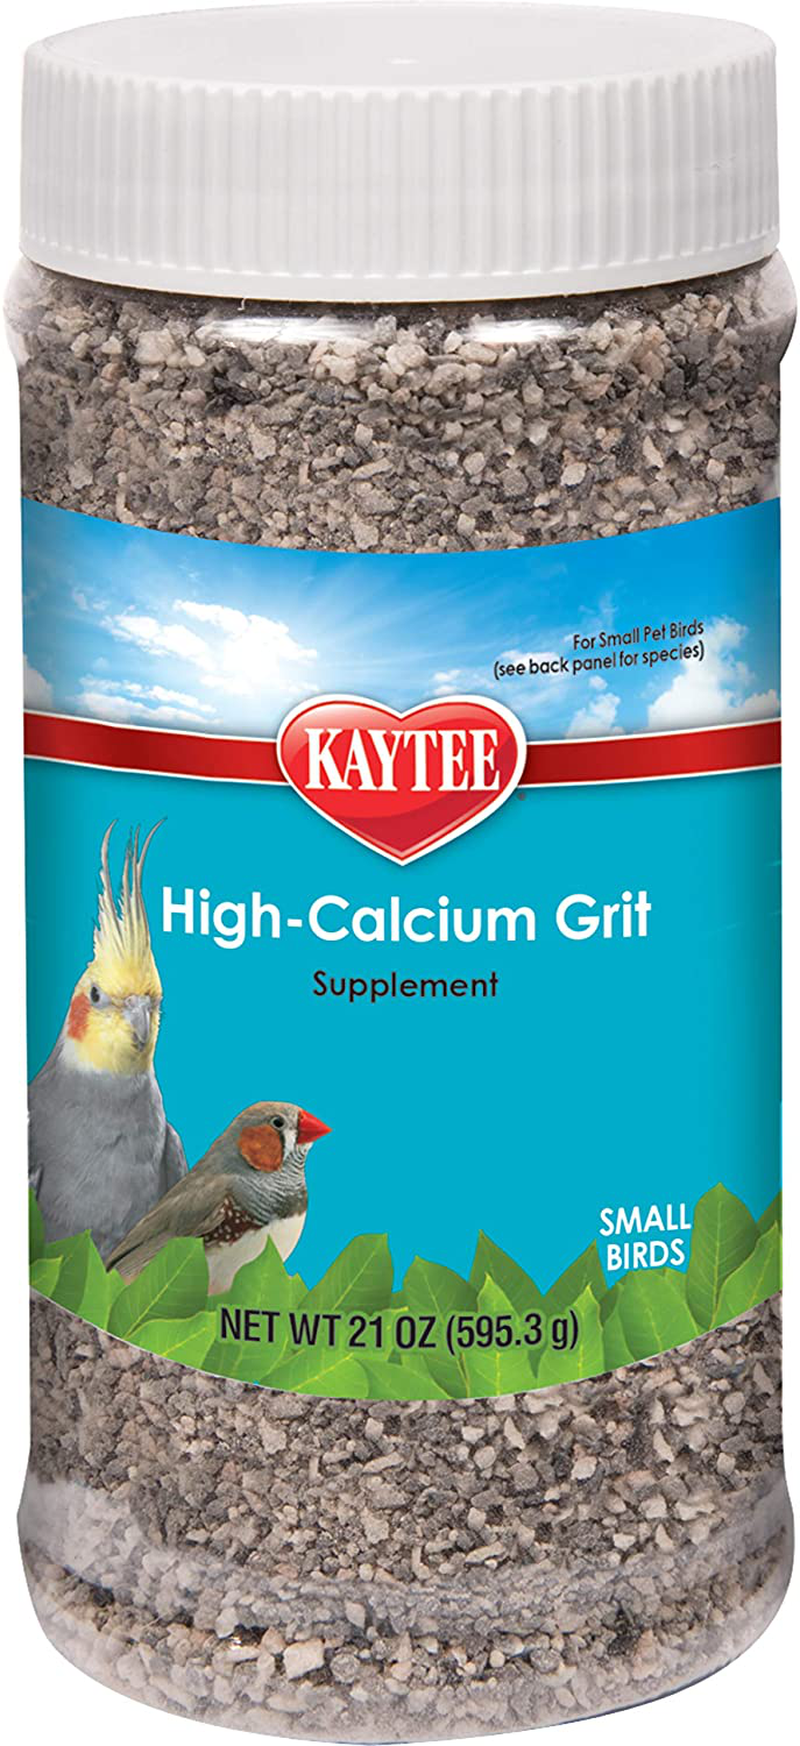 Kaytee Hi-Calcium Grit for Small Birds - Jar 21 Oz